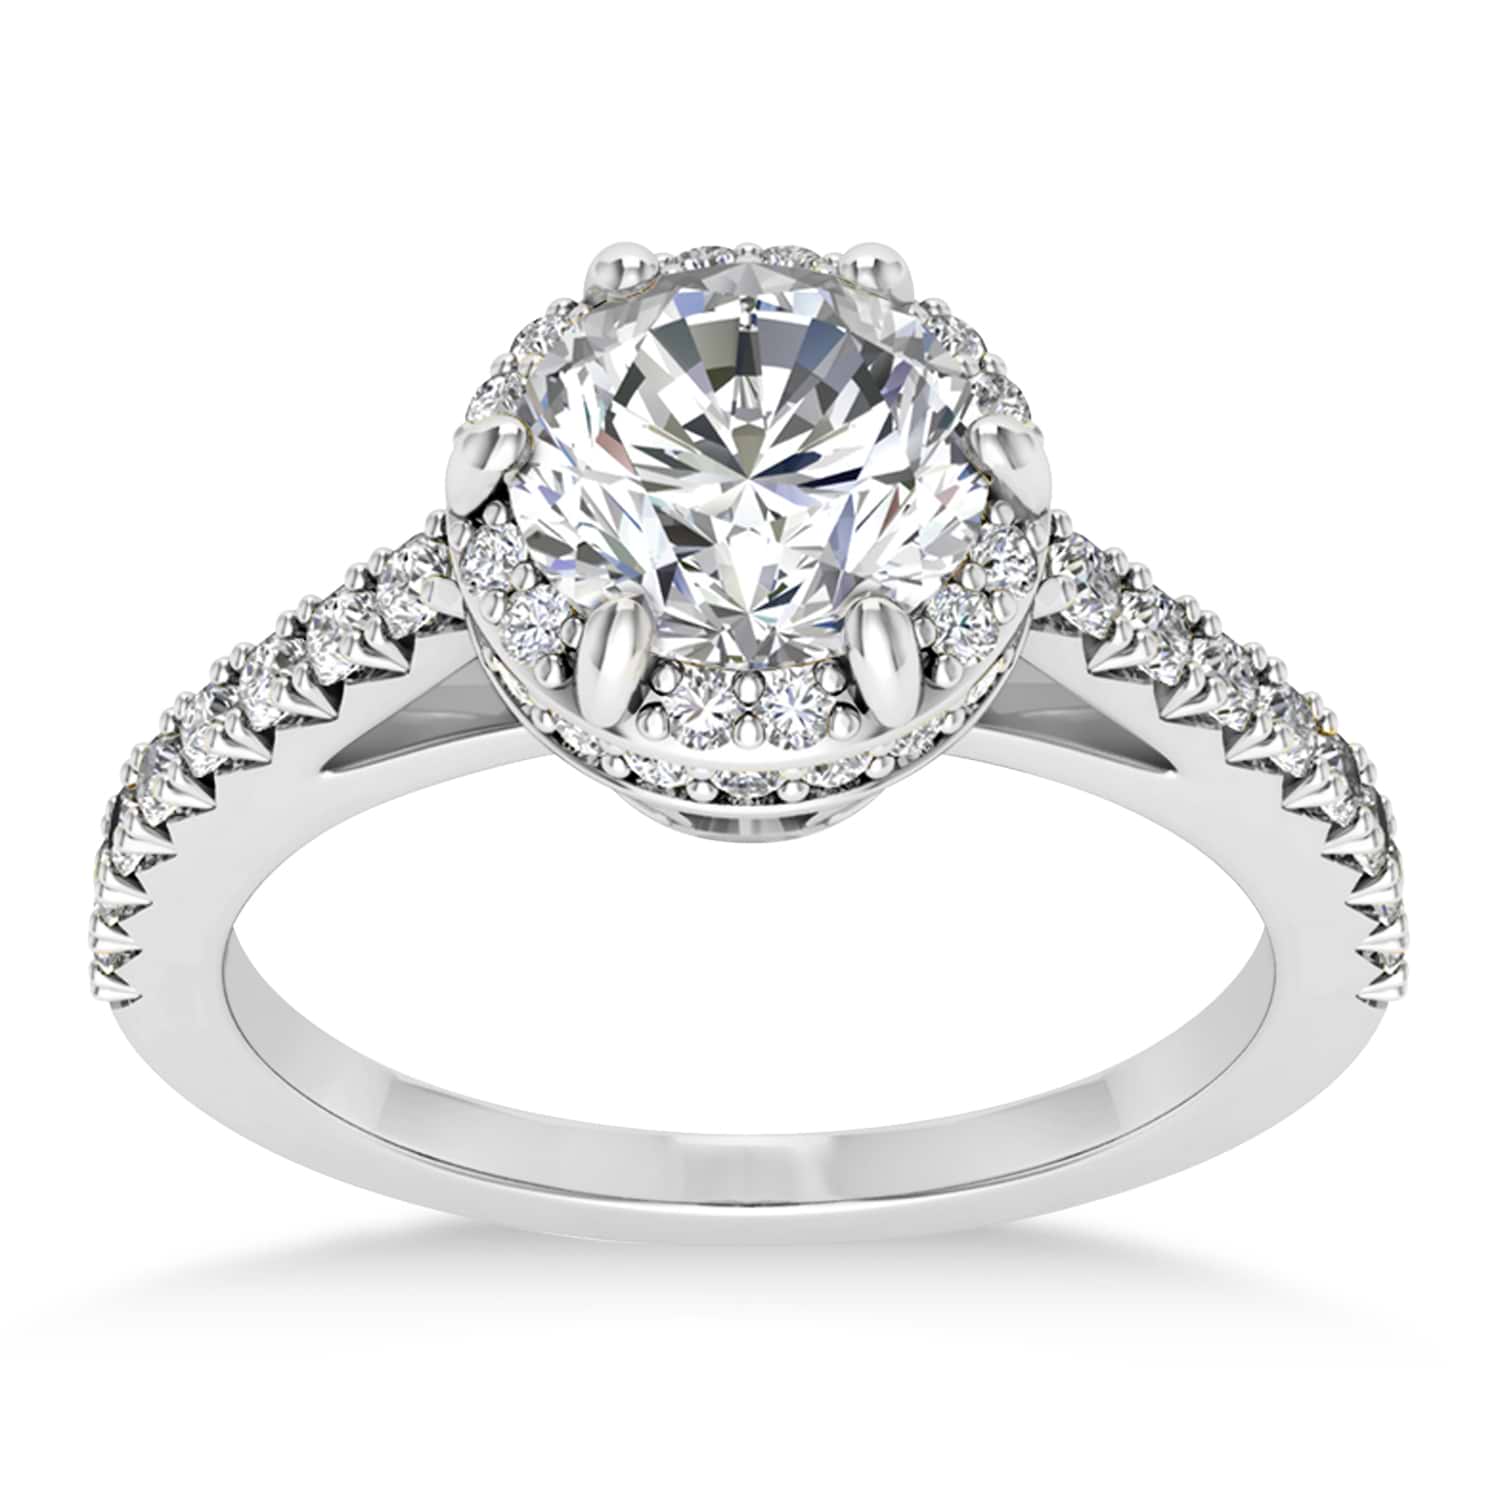 Diamond Sidestones Engagement Ring 18k White Gold (0.44ct)